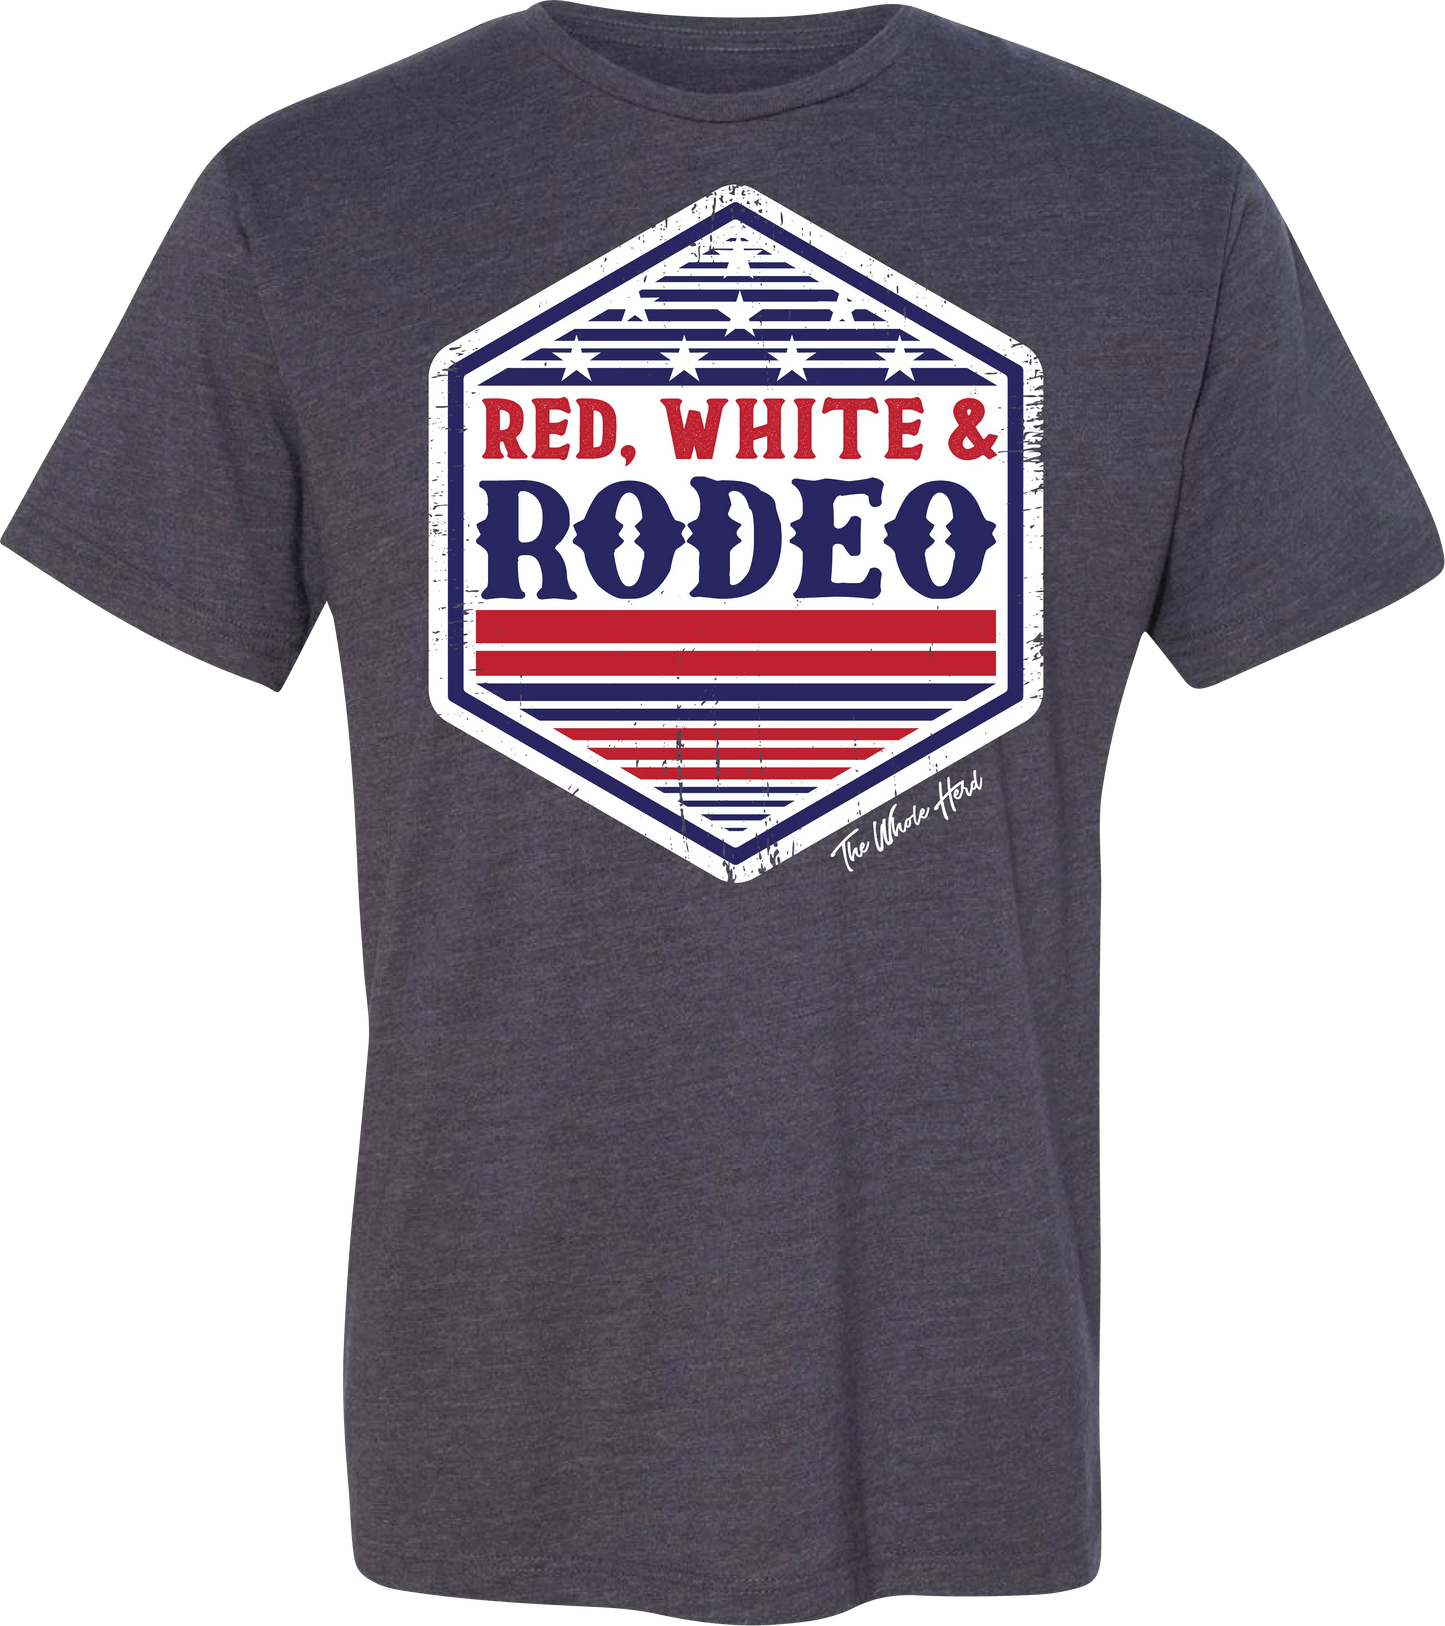 Red, White, & Rodeo Kids Tee